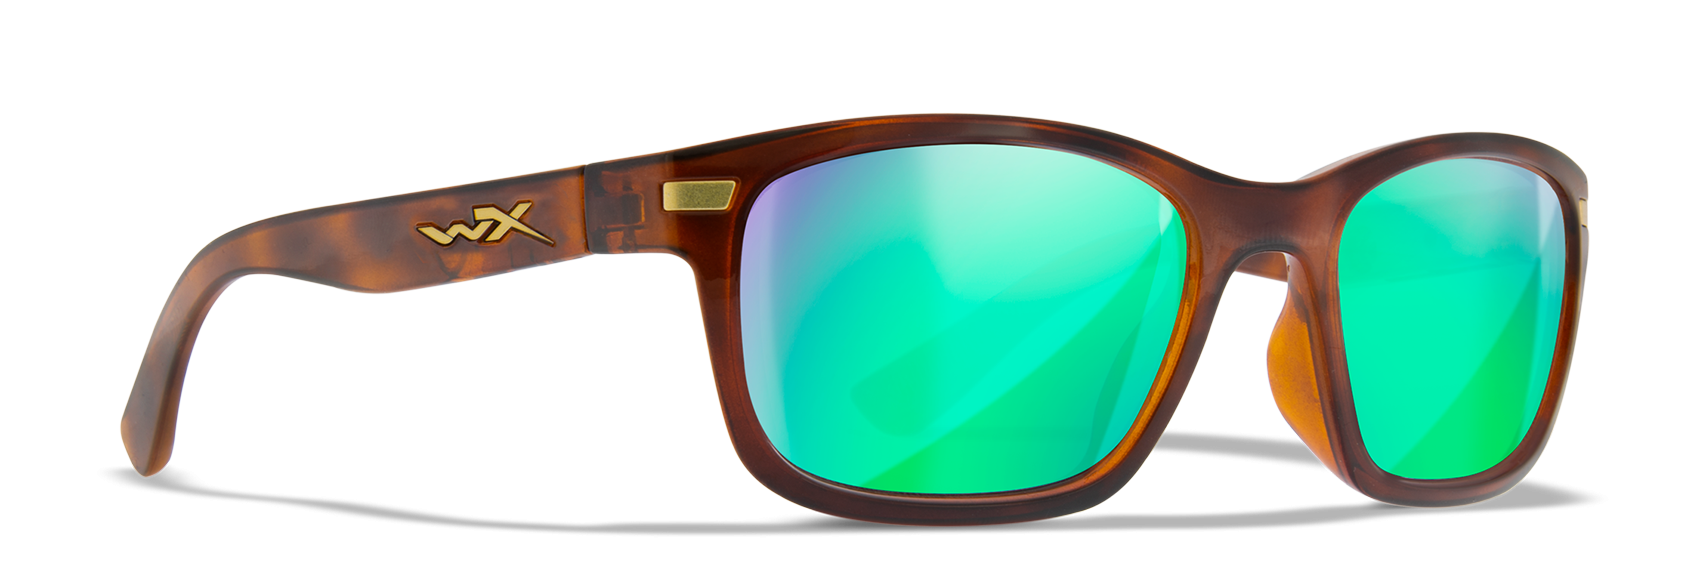 Wiley X WX Helix Gloss Demi Polycarbonate Sunglasses